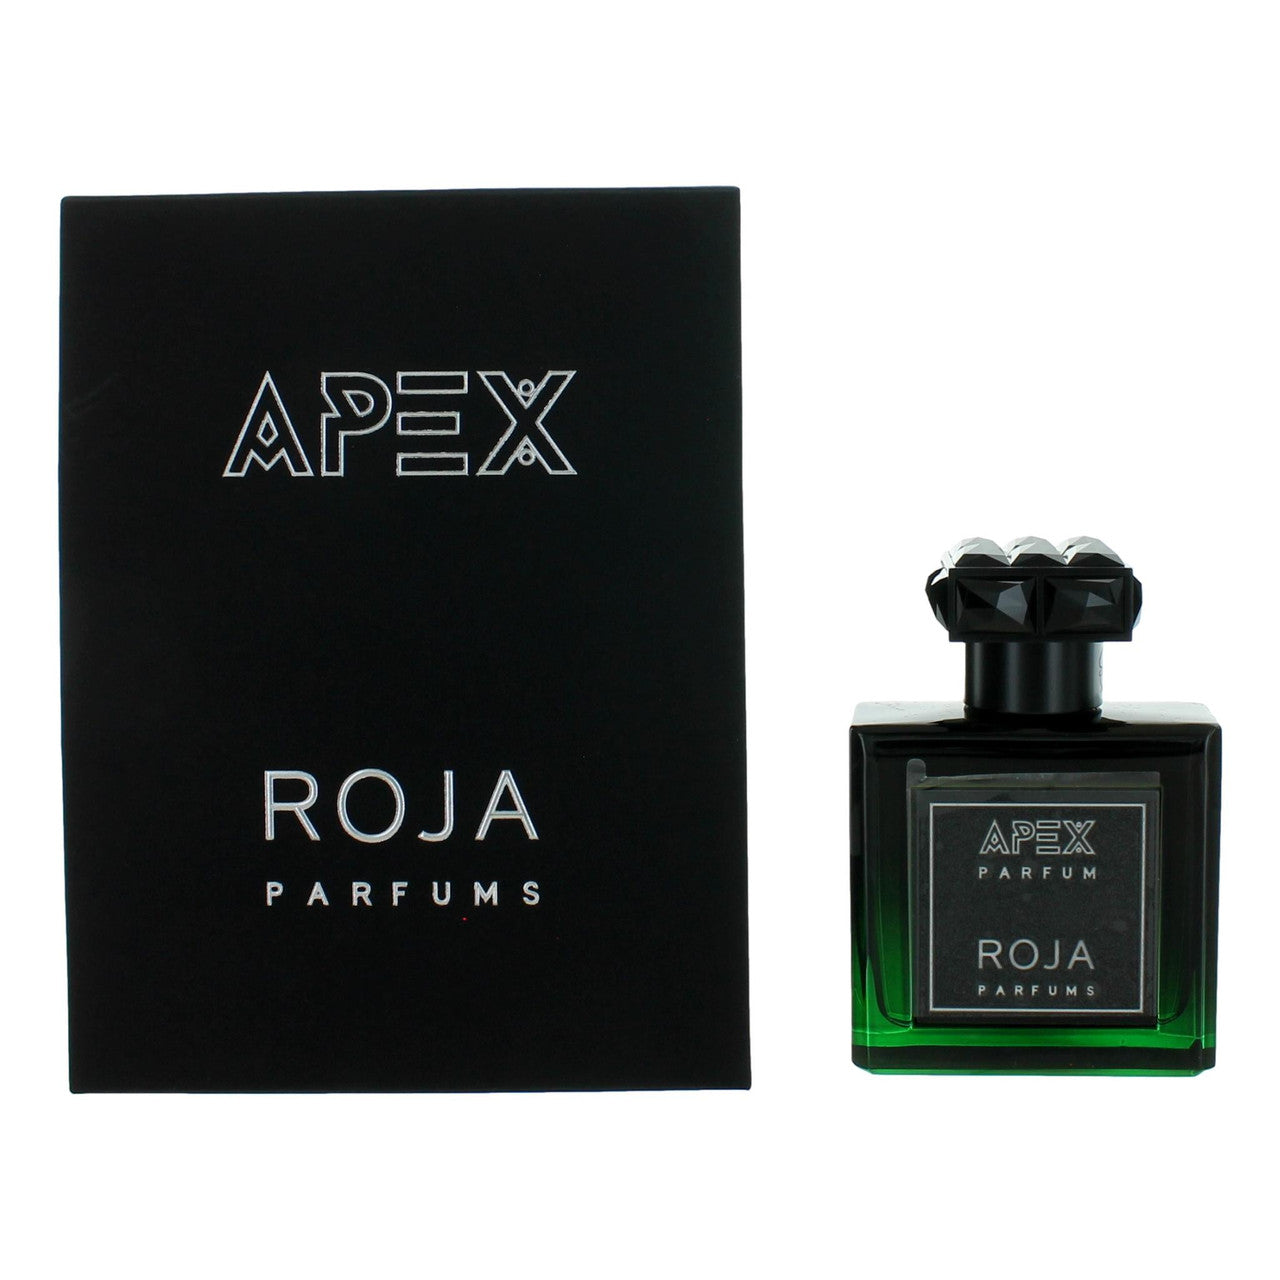 Apex by Roja Parfums, 1.7 oz Parfum Spray for Men